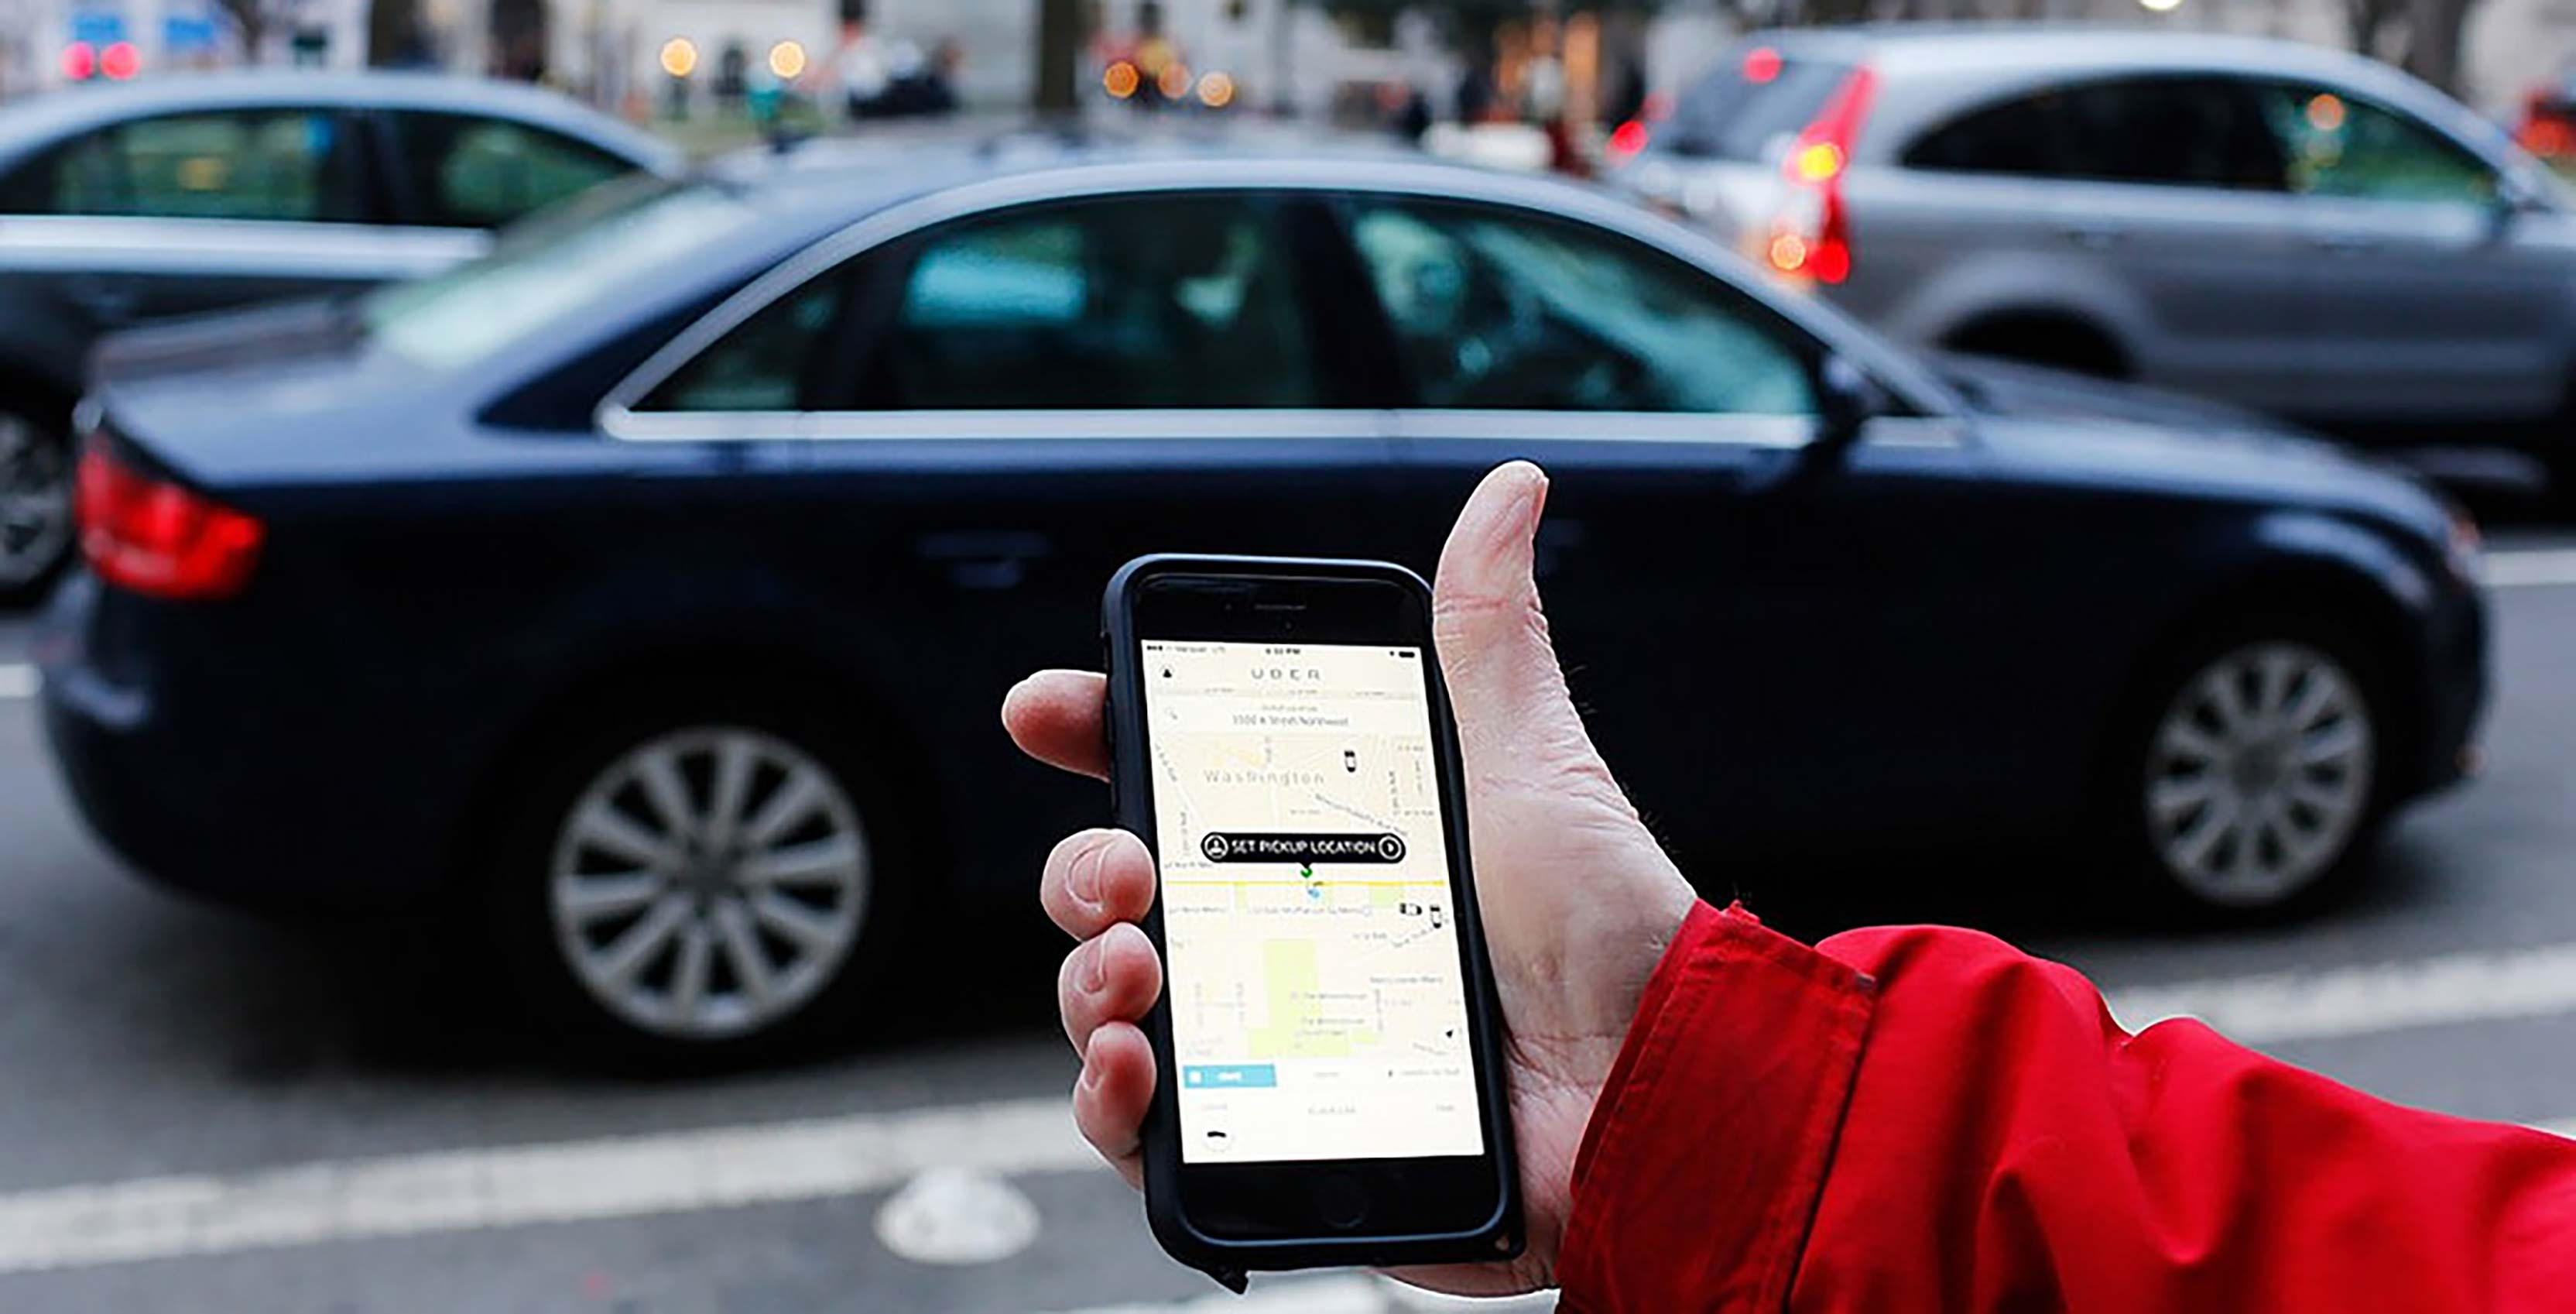 Uber app on phone car pickup